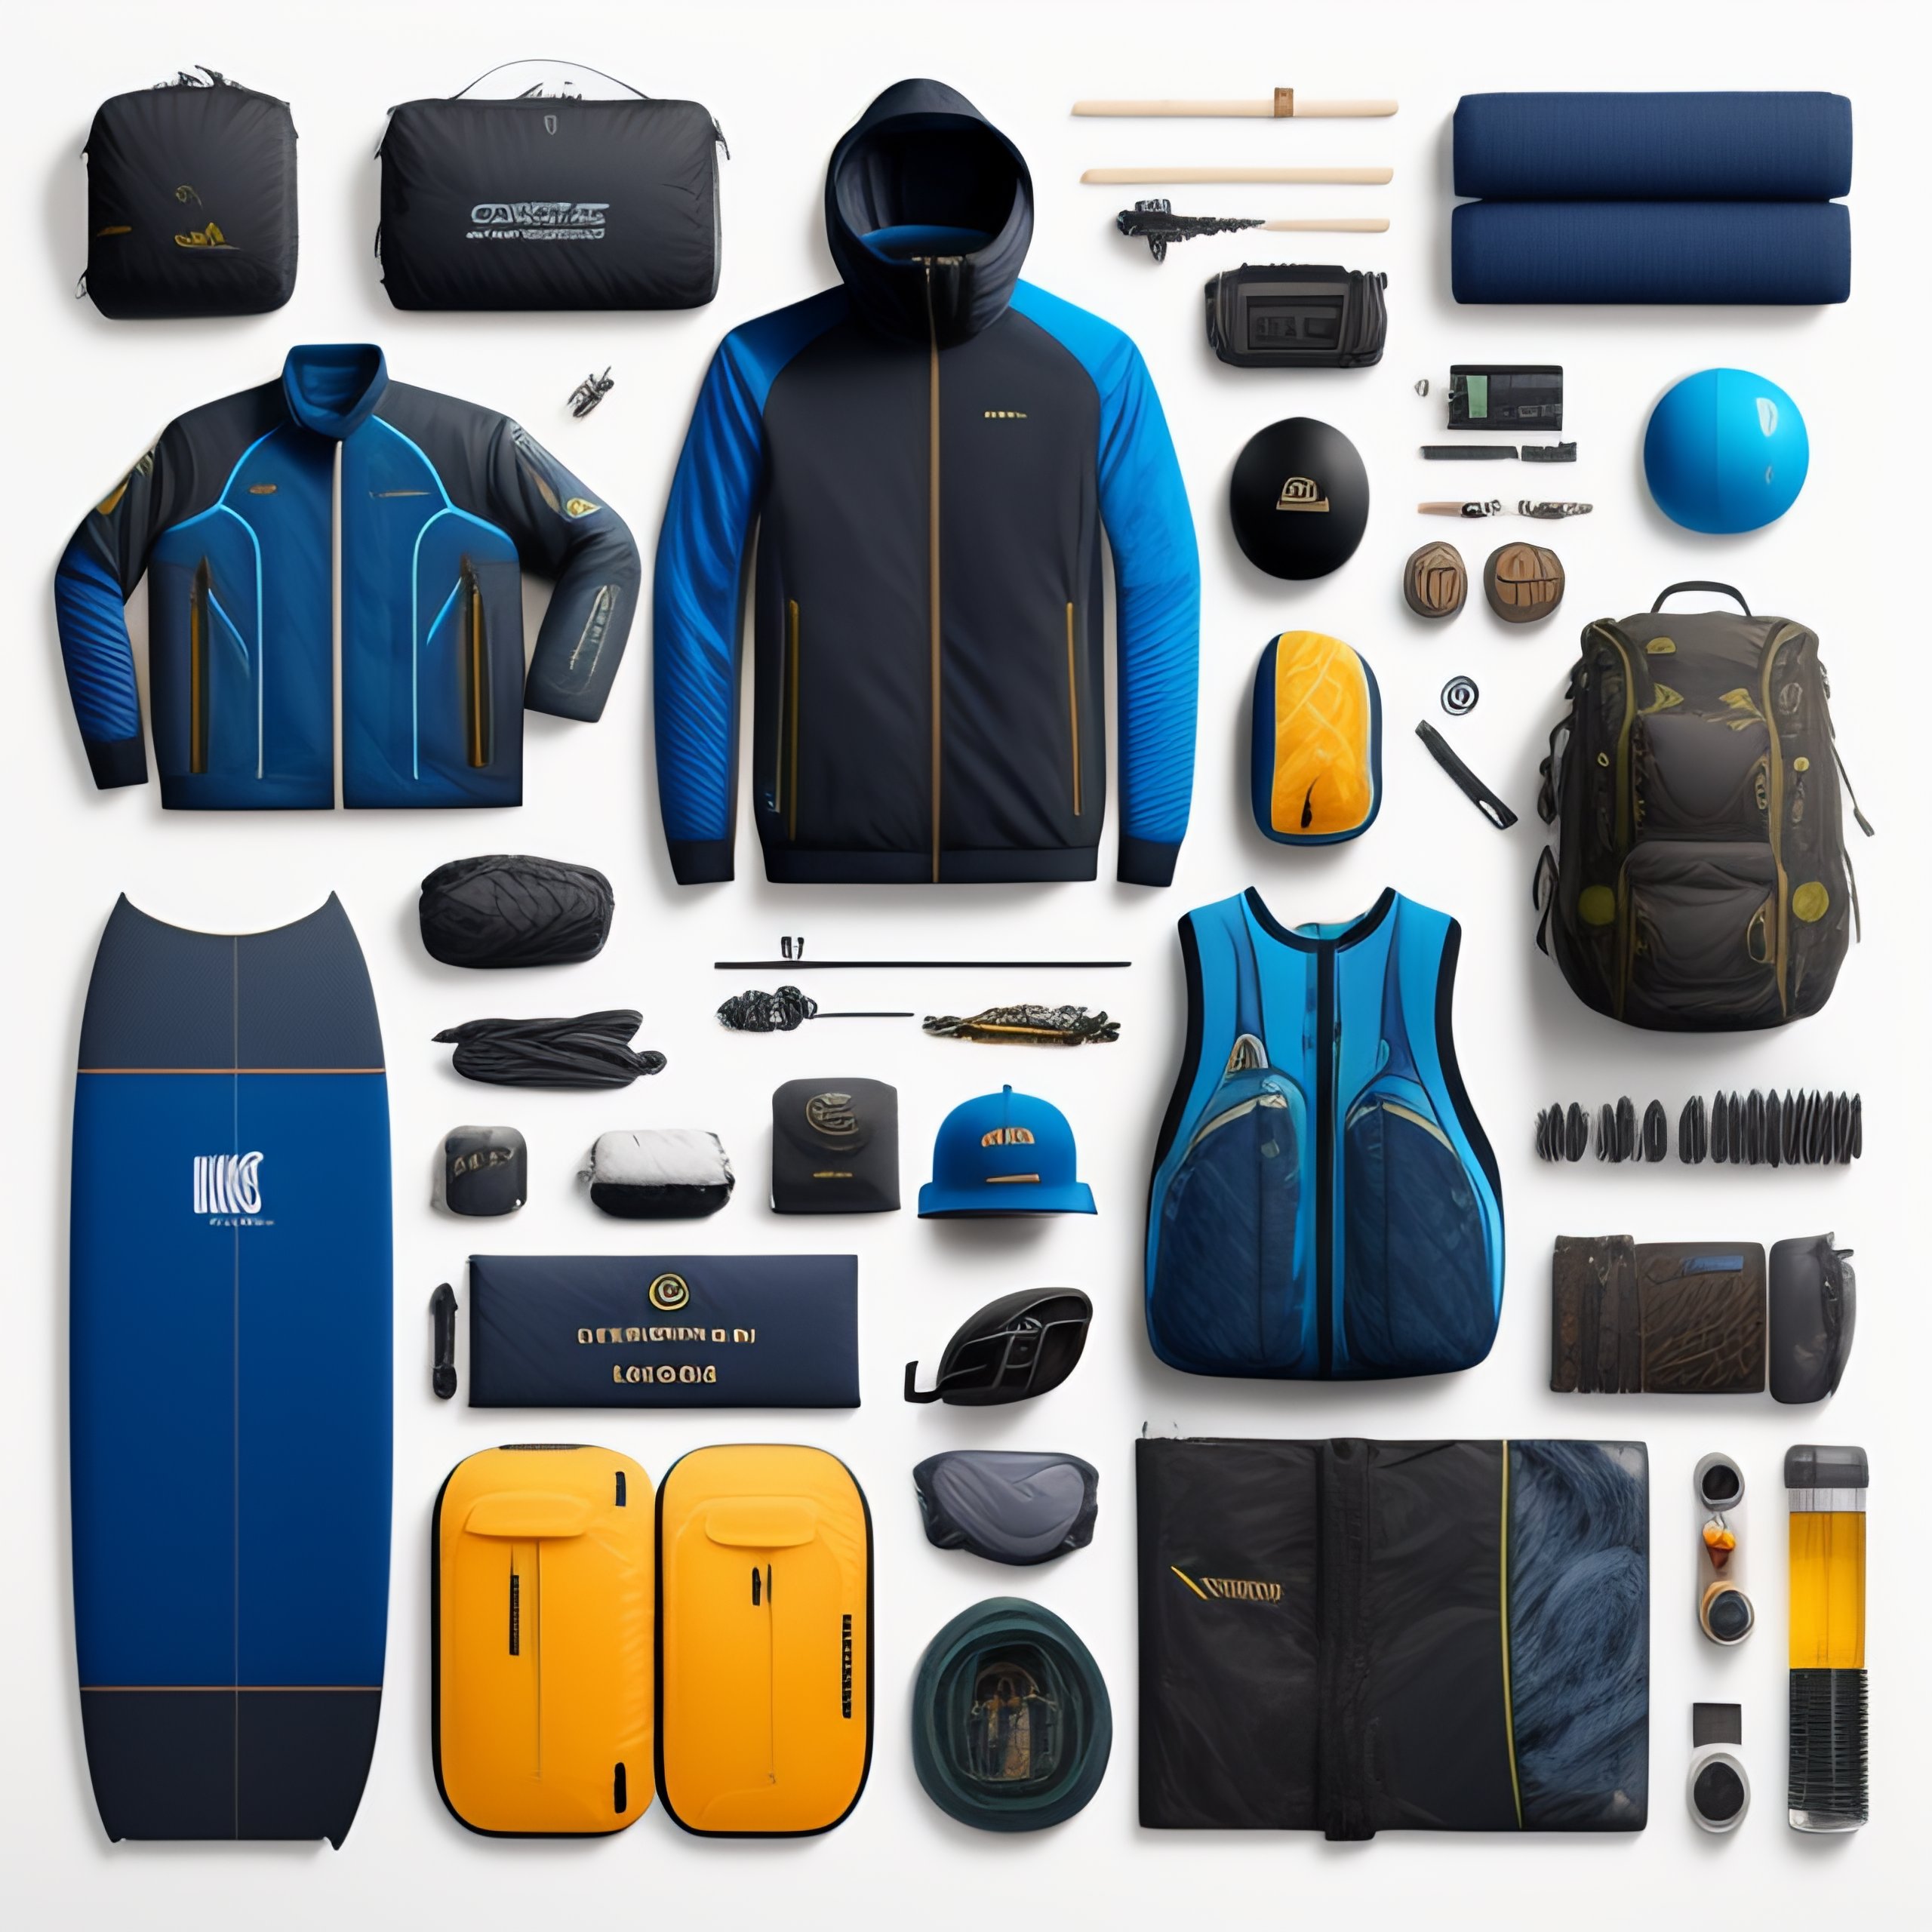 kayak camping gear